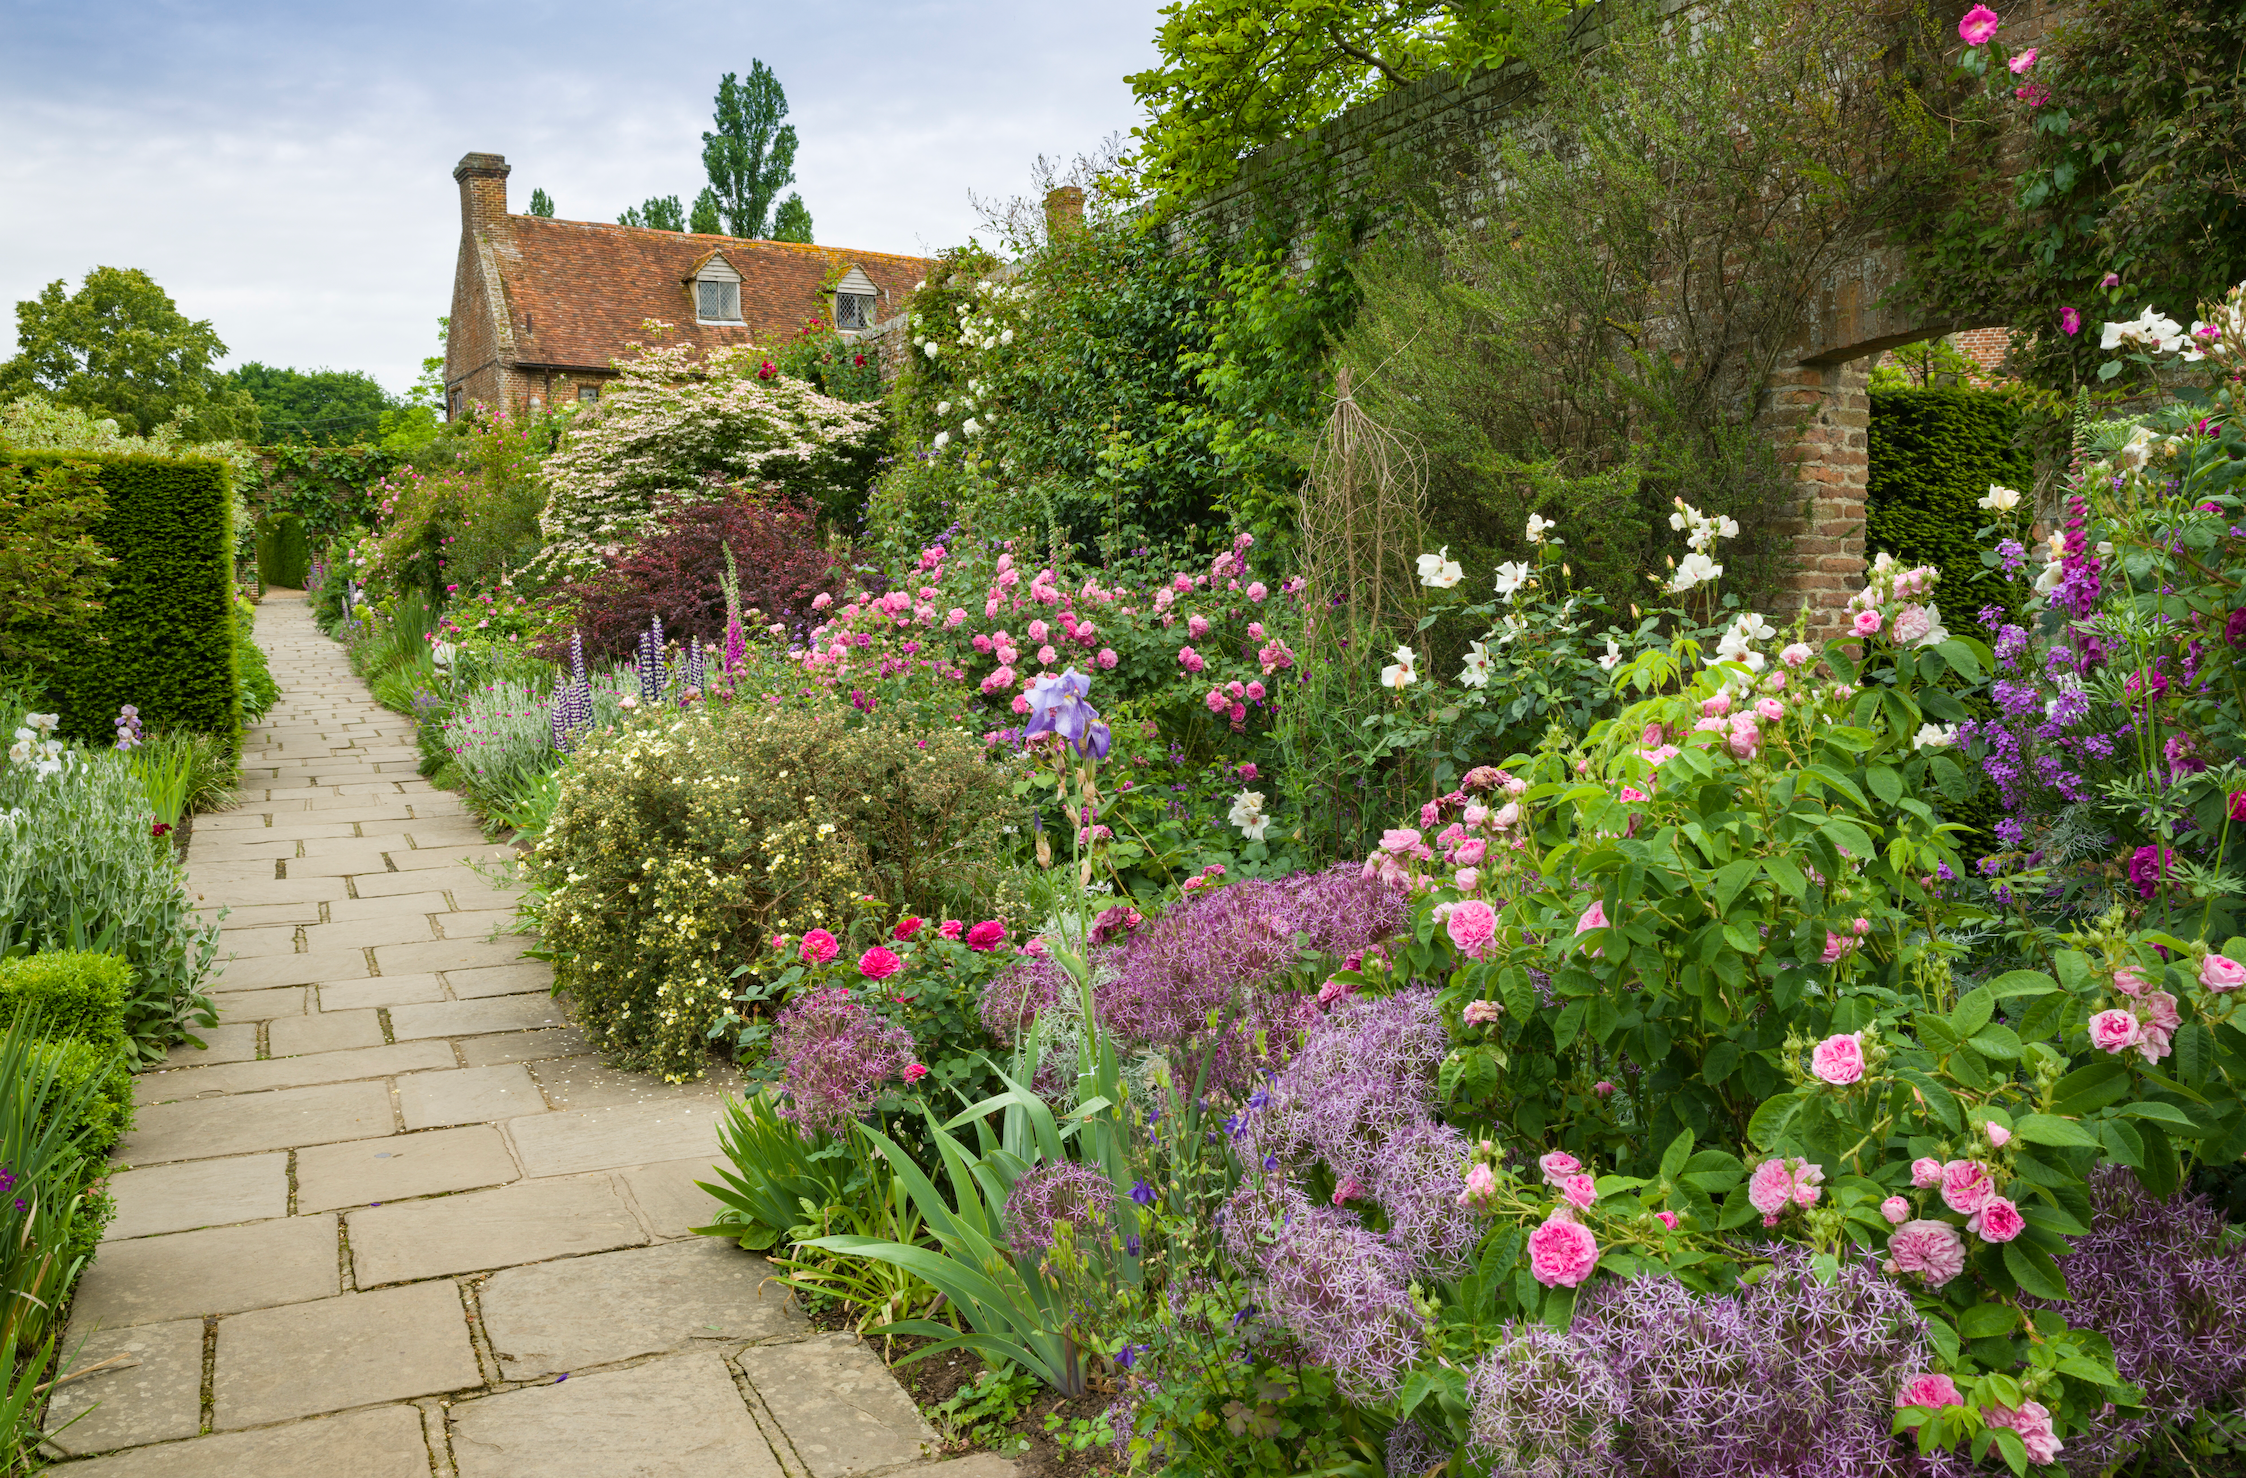 The ‘epitome of the English garden’: the Rose Garden at Sissinghurst Castle